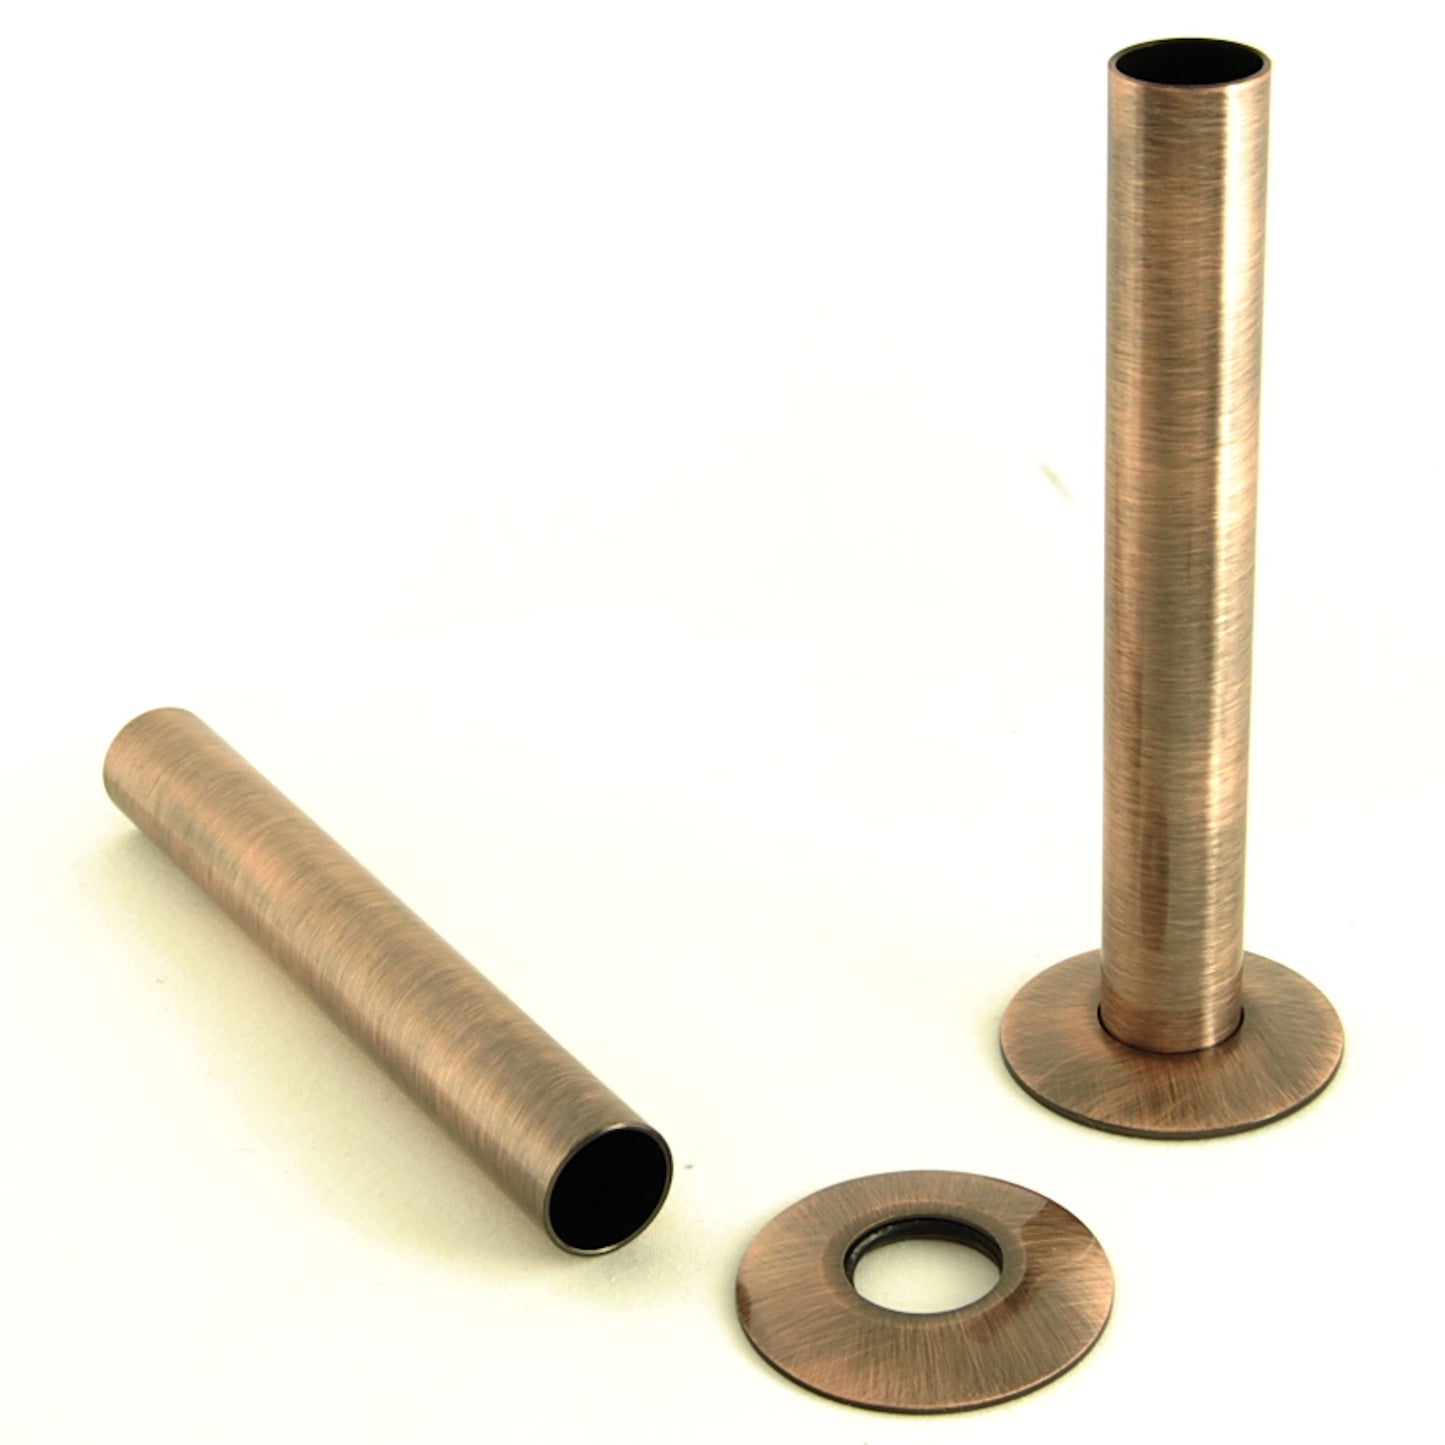 Radiator Pipe Cover Kit 130mm - Antique Copper